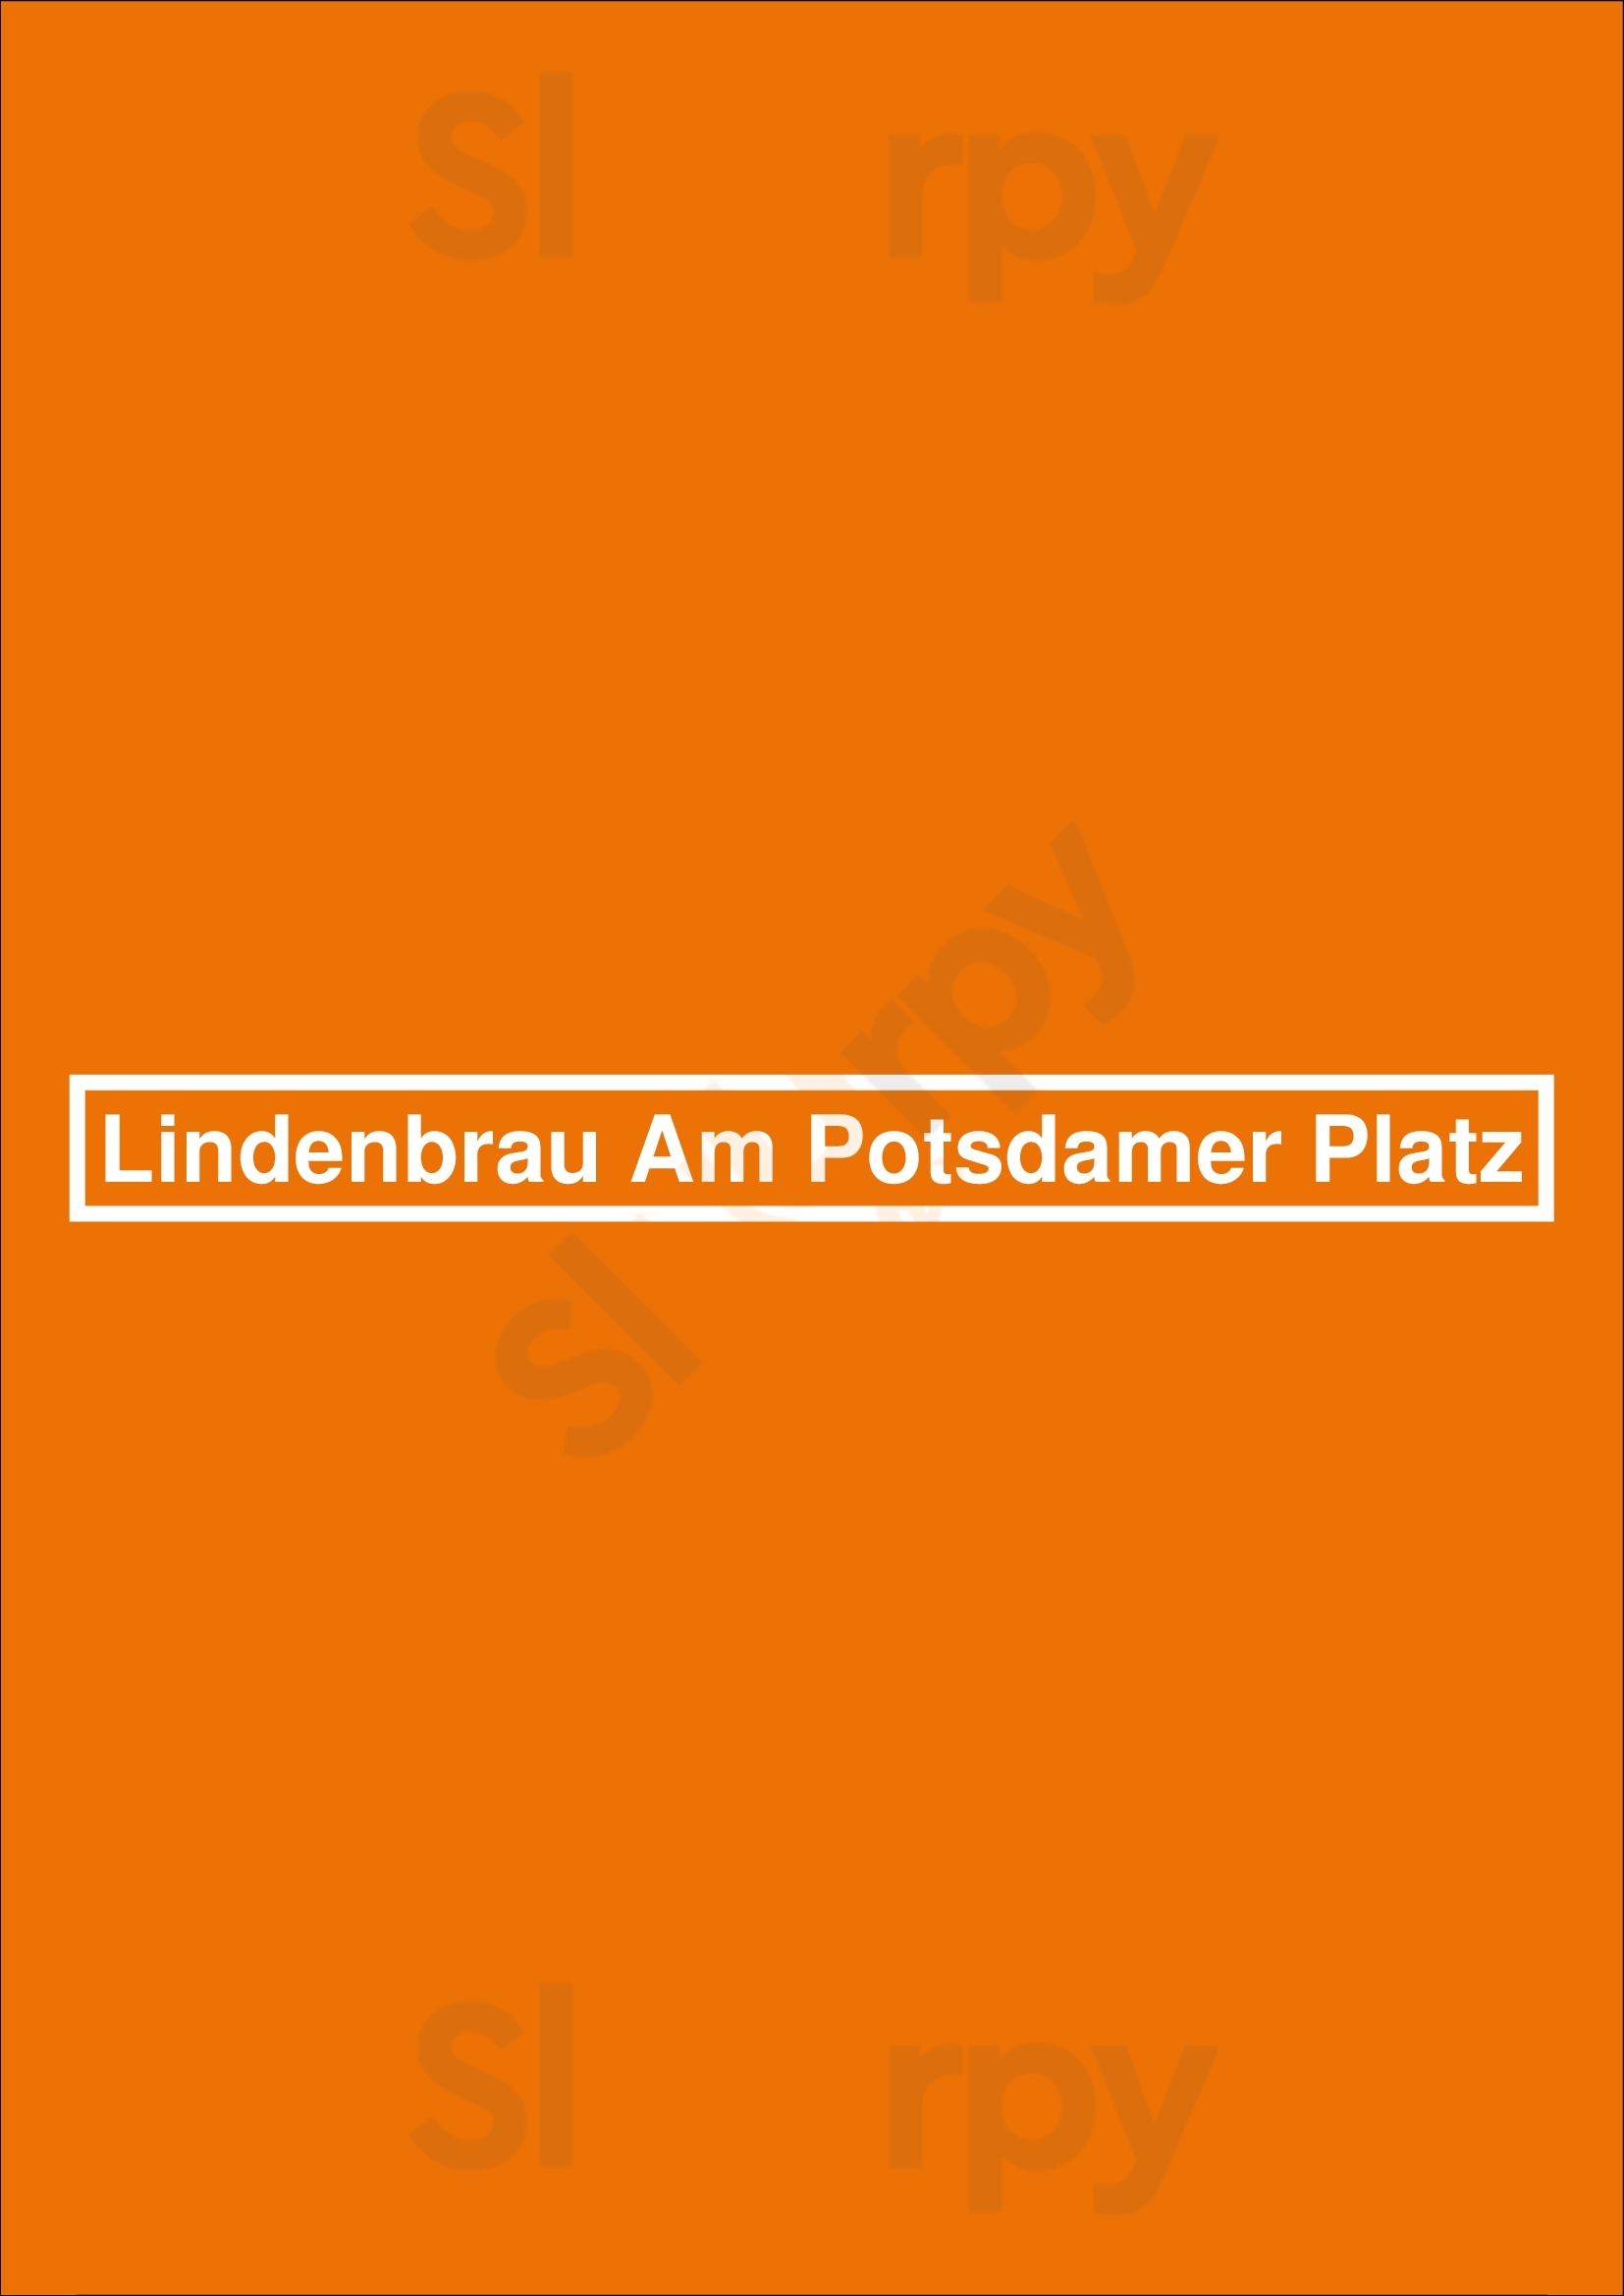 Lindenbräu Am Potsdamer Platz Berlin Menu - 1